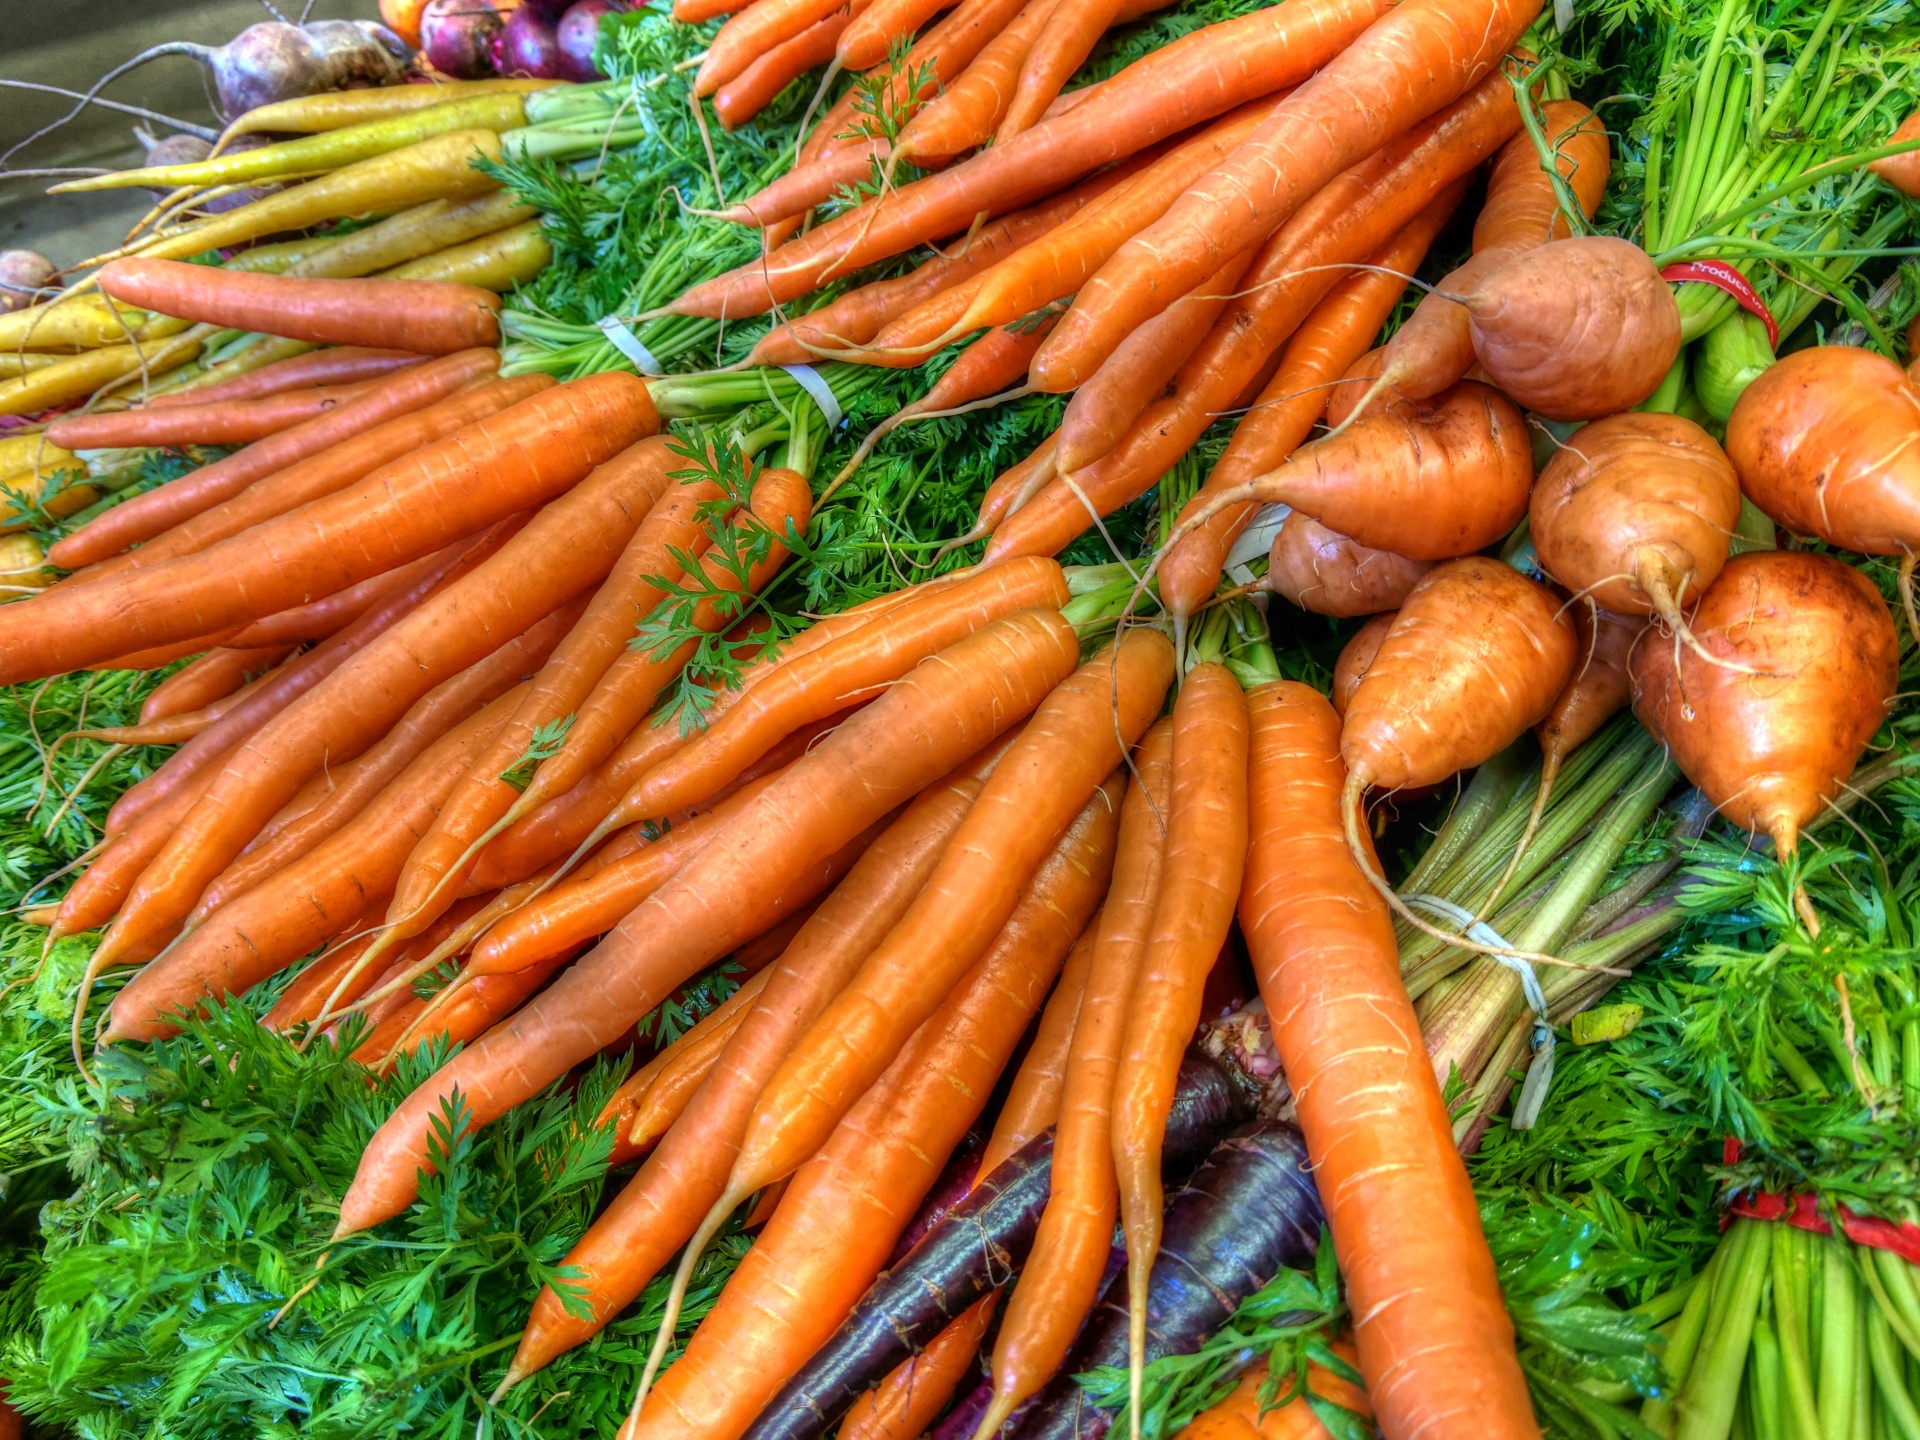 Download free photo of Carrot,carrots,vegetable,vegan,health - from needpix.com